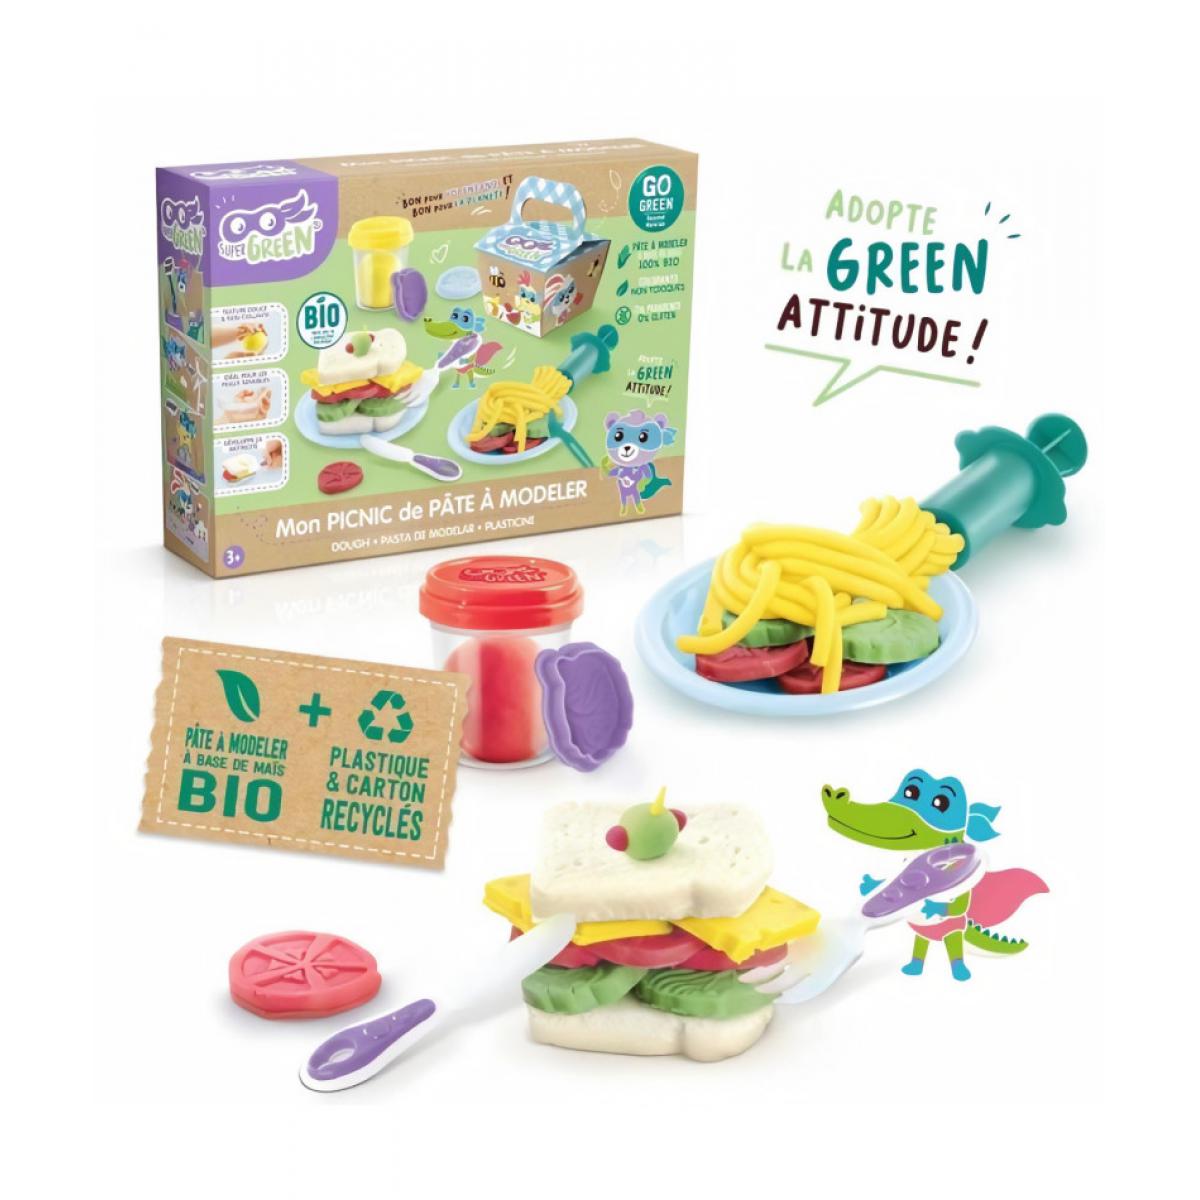 Canal Toys - SUPER GREEN Kit pique-nique de pâte a modeler bio - Modelage